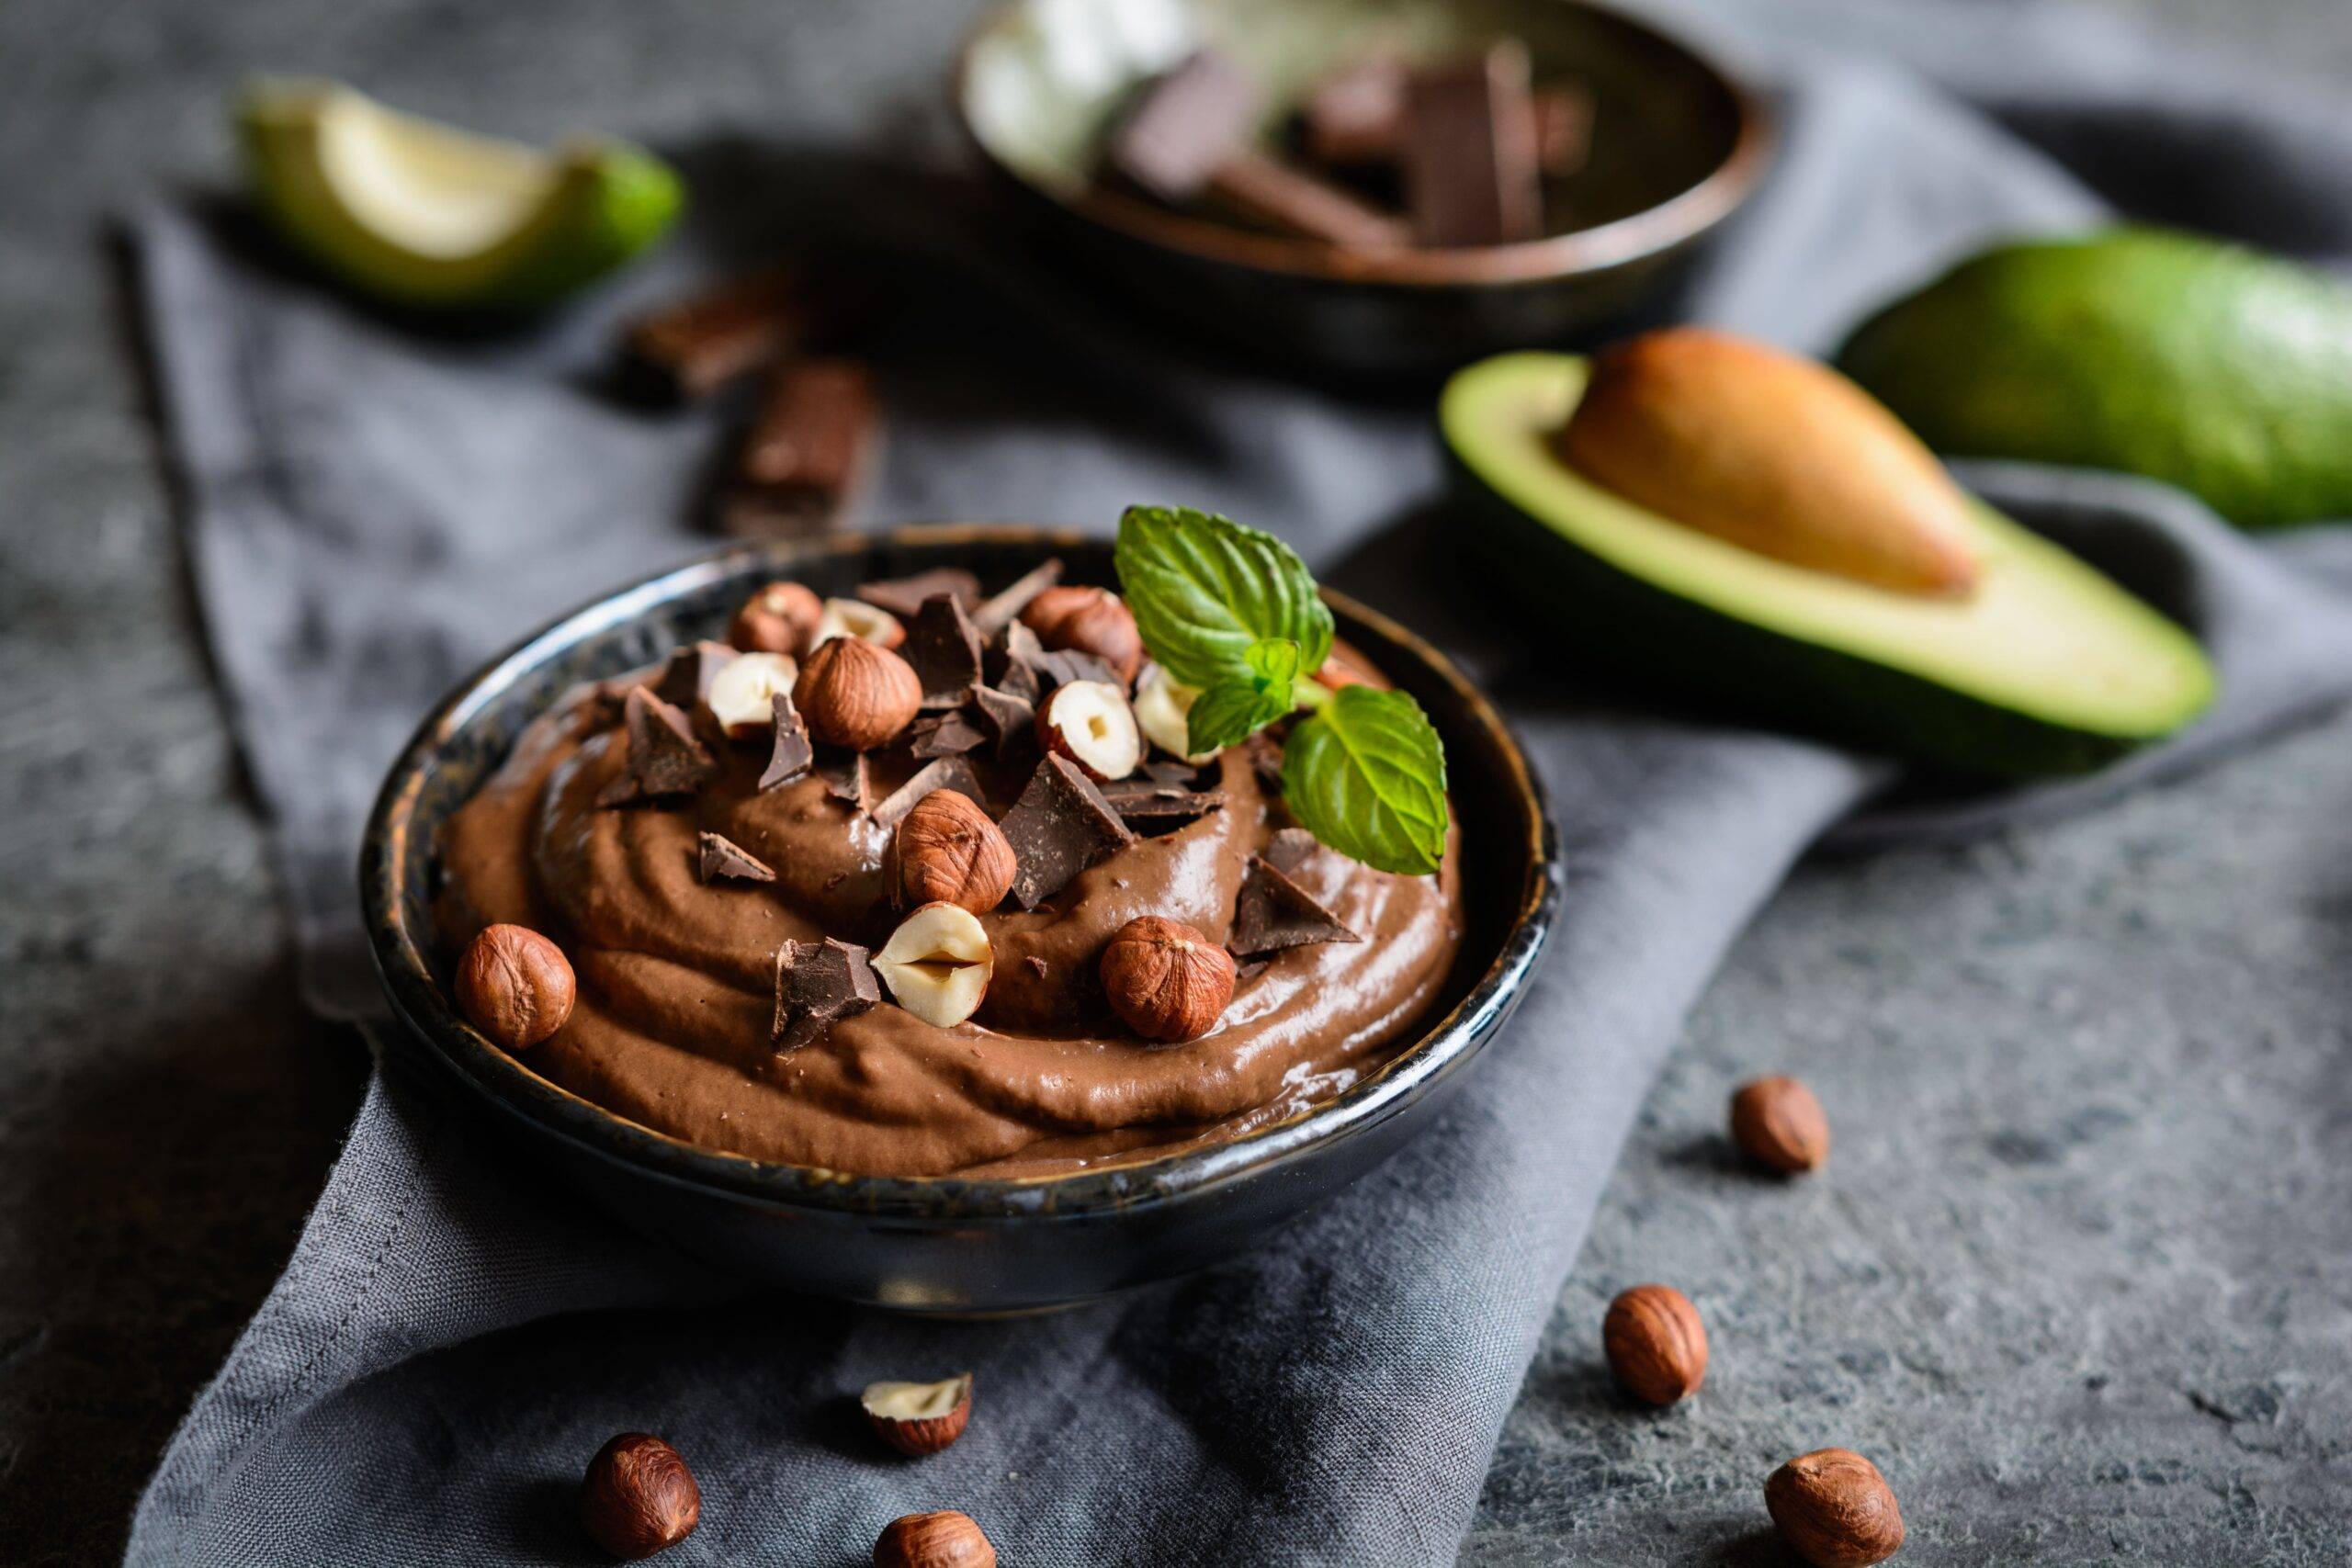 Chocolate Avocado Mousse with Coconut Cream